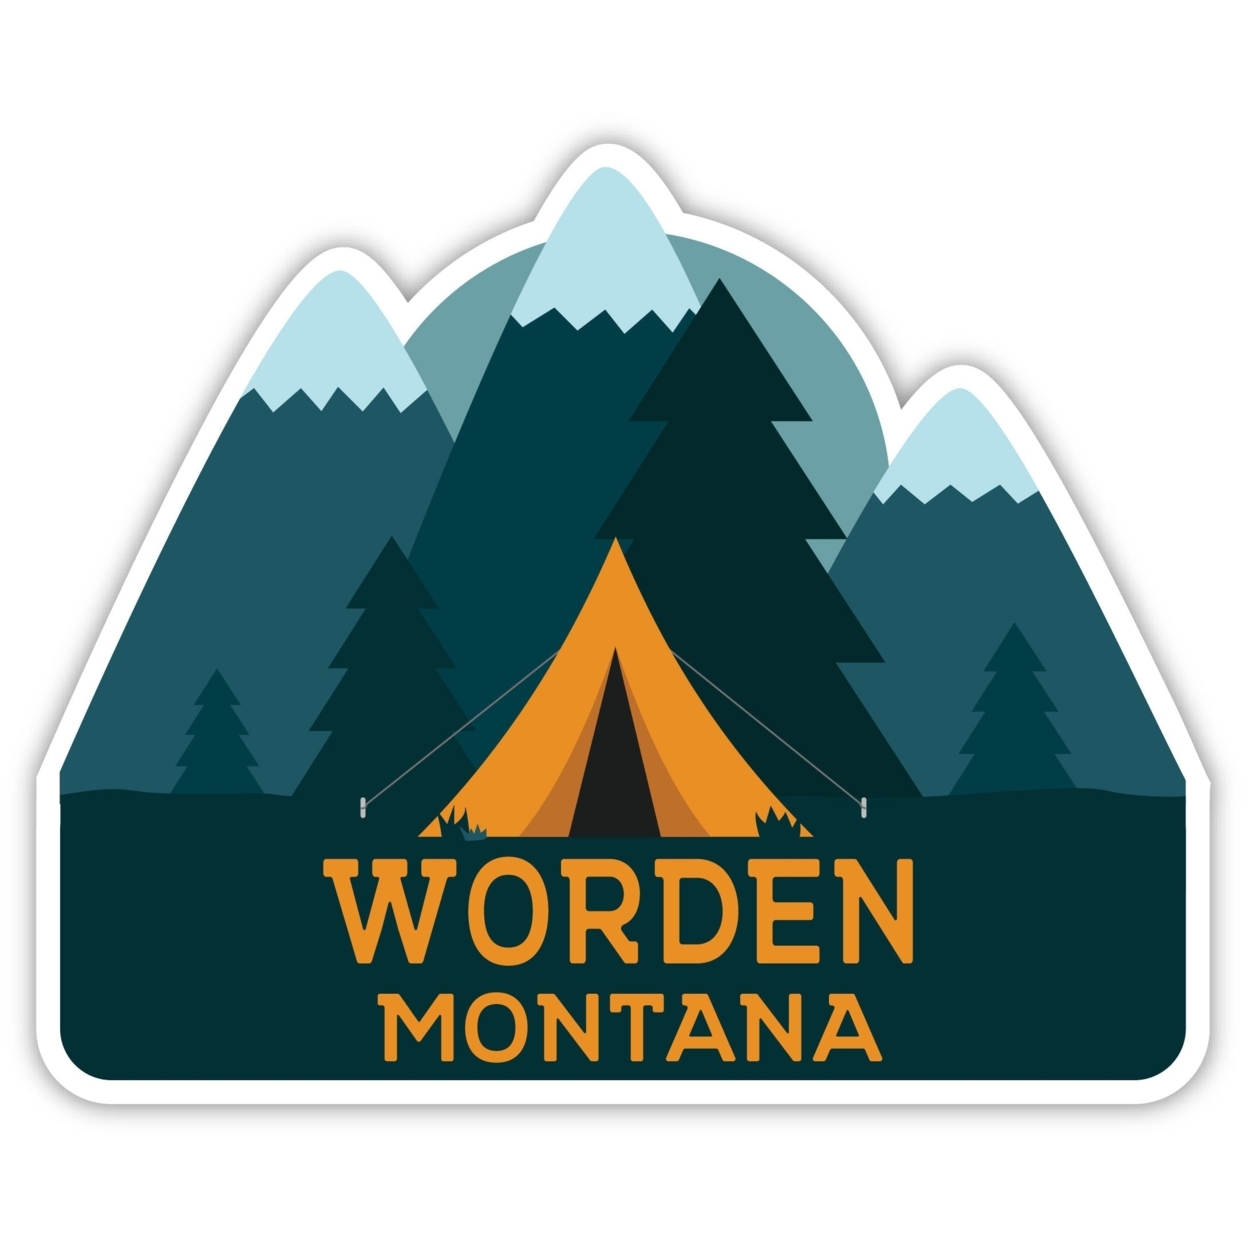 Worden Montana Souvenir Decorative Stickers (Choose Theme And Size) - Single Unit, 4-Inch, Tent